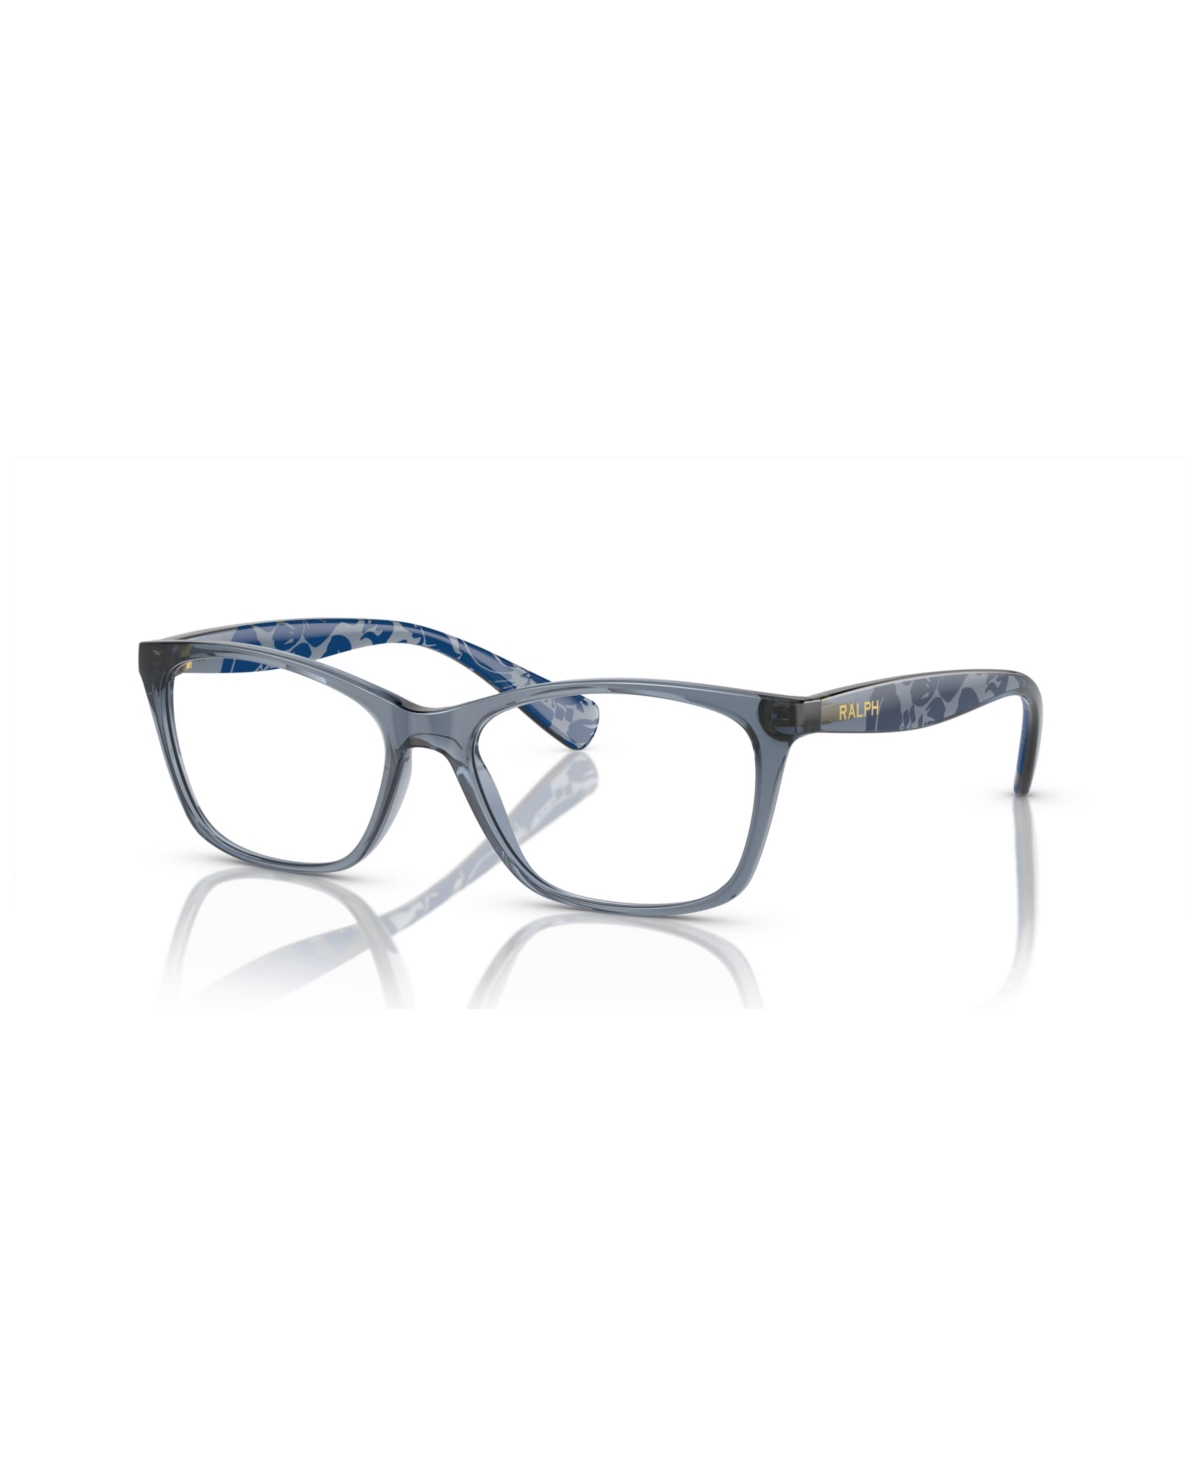 Women's Eyeglasses, RA7071 - Shiny Trasparent Blue